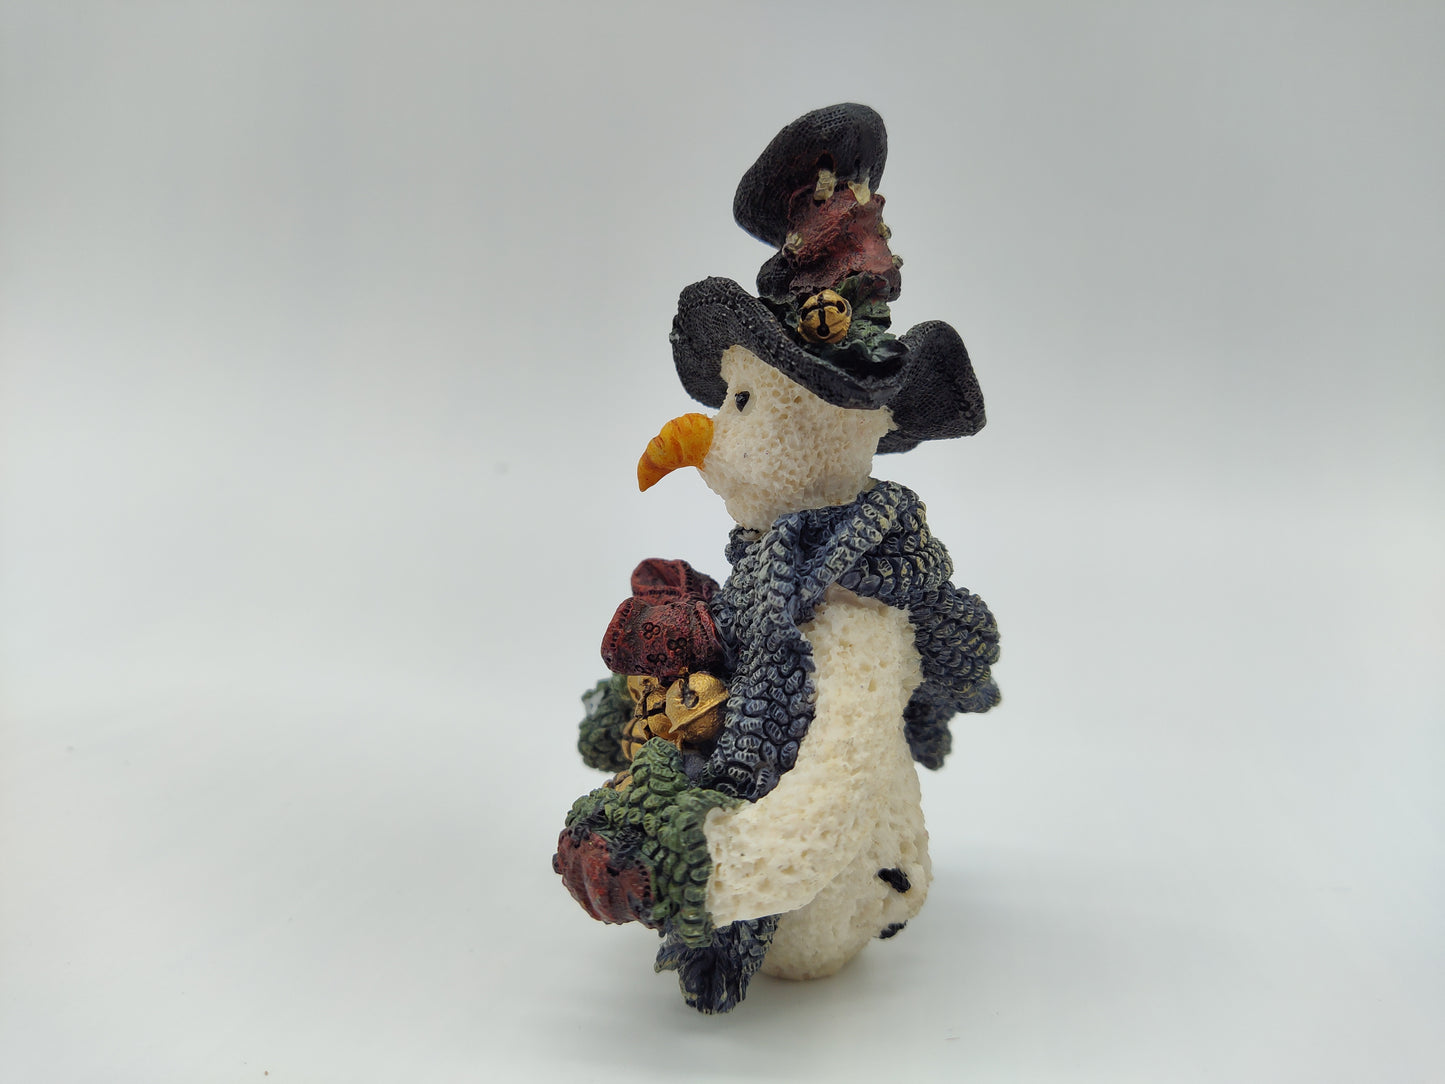 Boyd’s Snowman ornament “Jingles The Snowman W/Wreath” 4” With Box 1990s